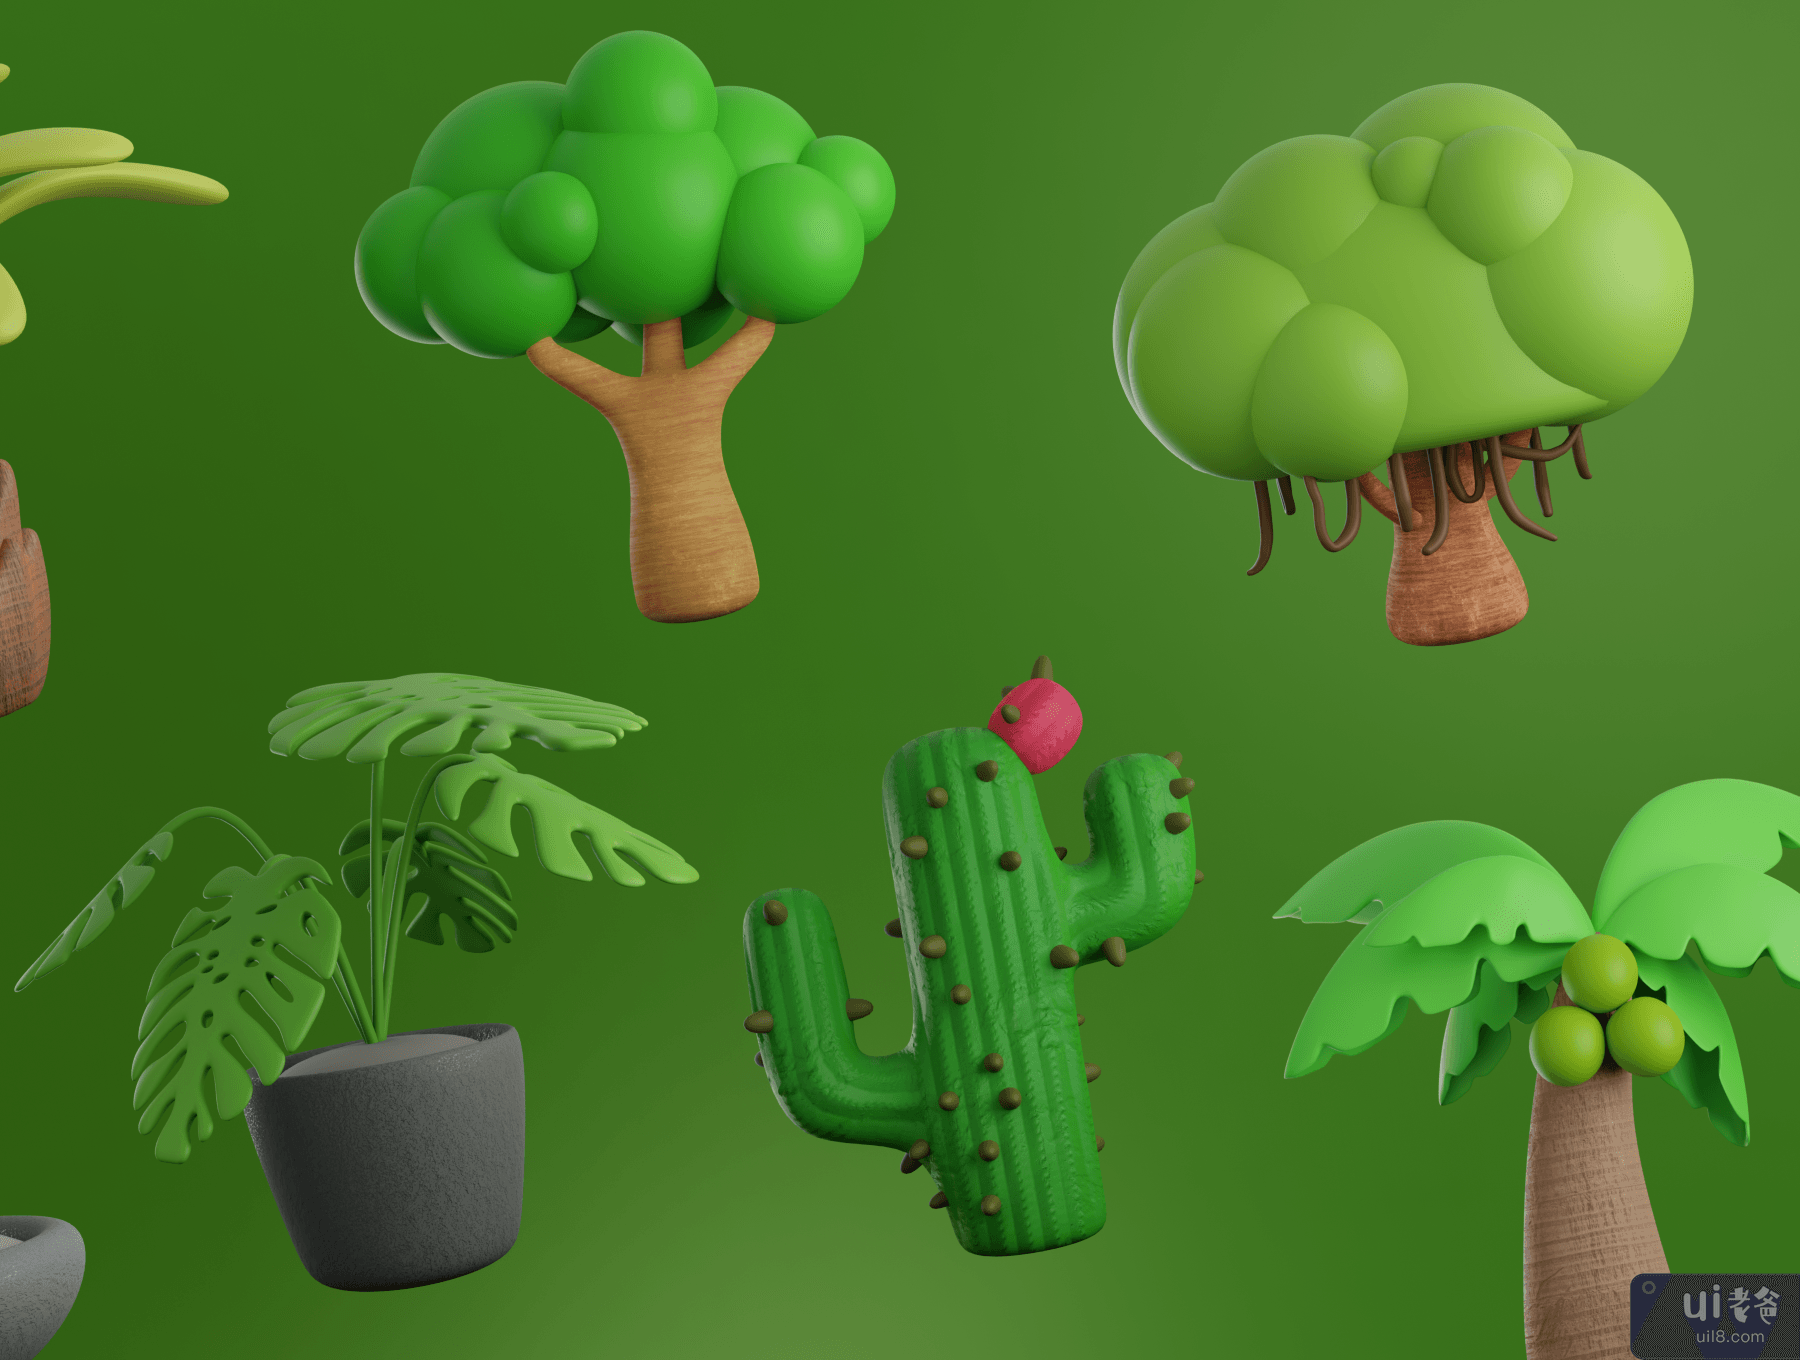 Treeby - 树和植物 3D 图标集 (Treeby - Tree & Plant 3D Icon Set)插图6